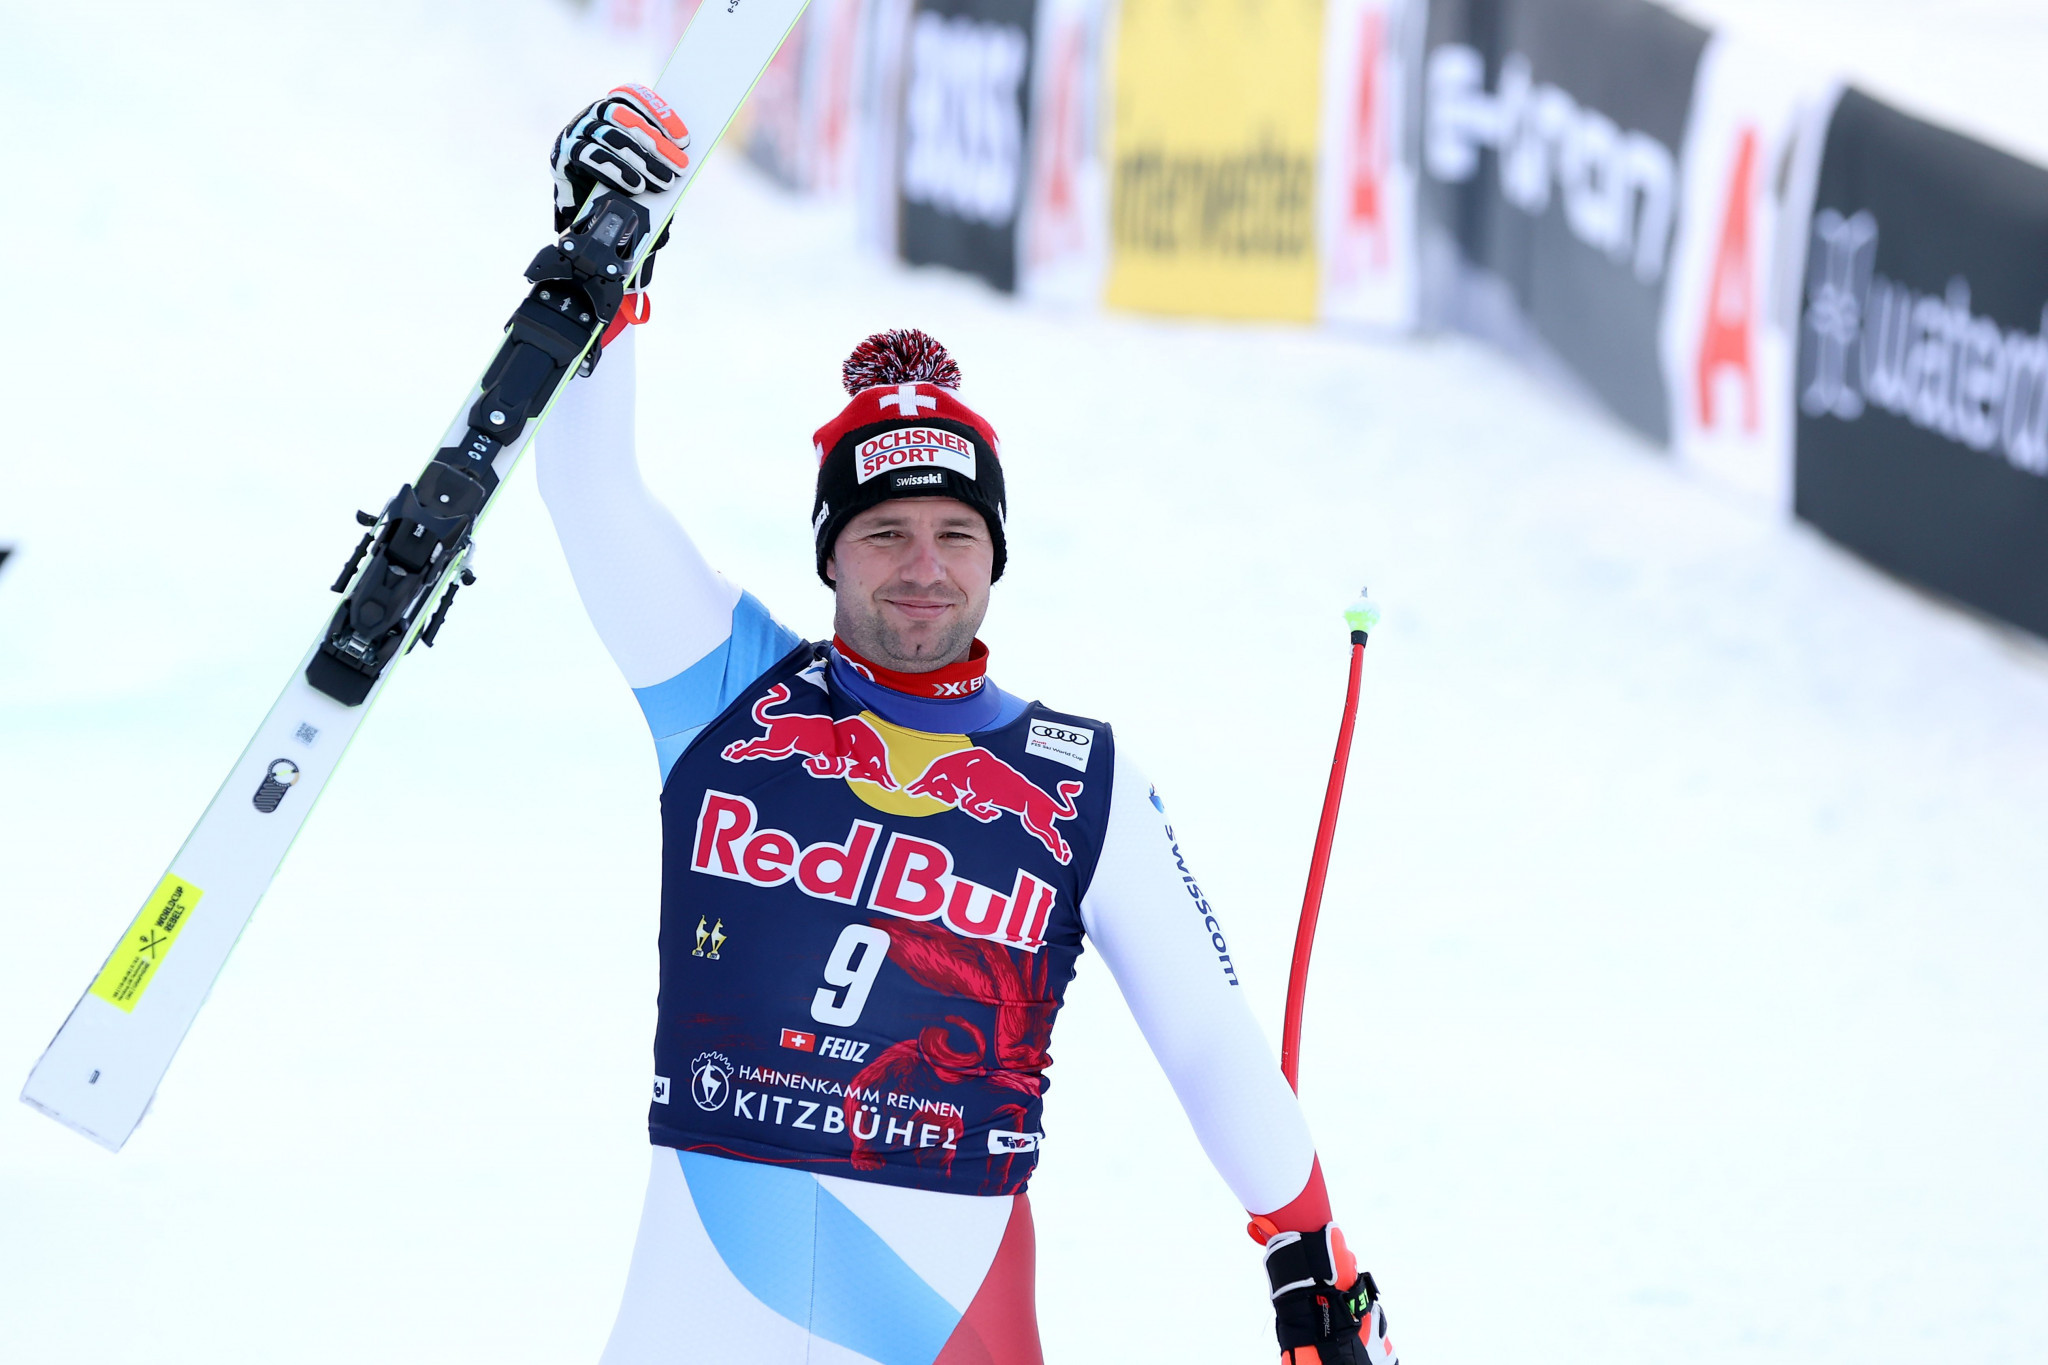 Feuz earns first Alpine Ski World Cup win of season in downhill at Kitzbühel